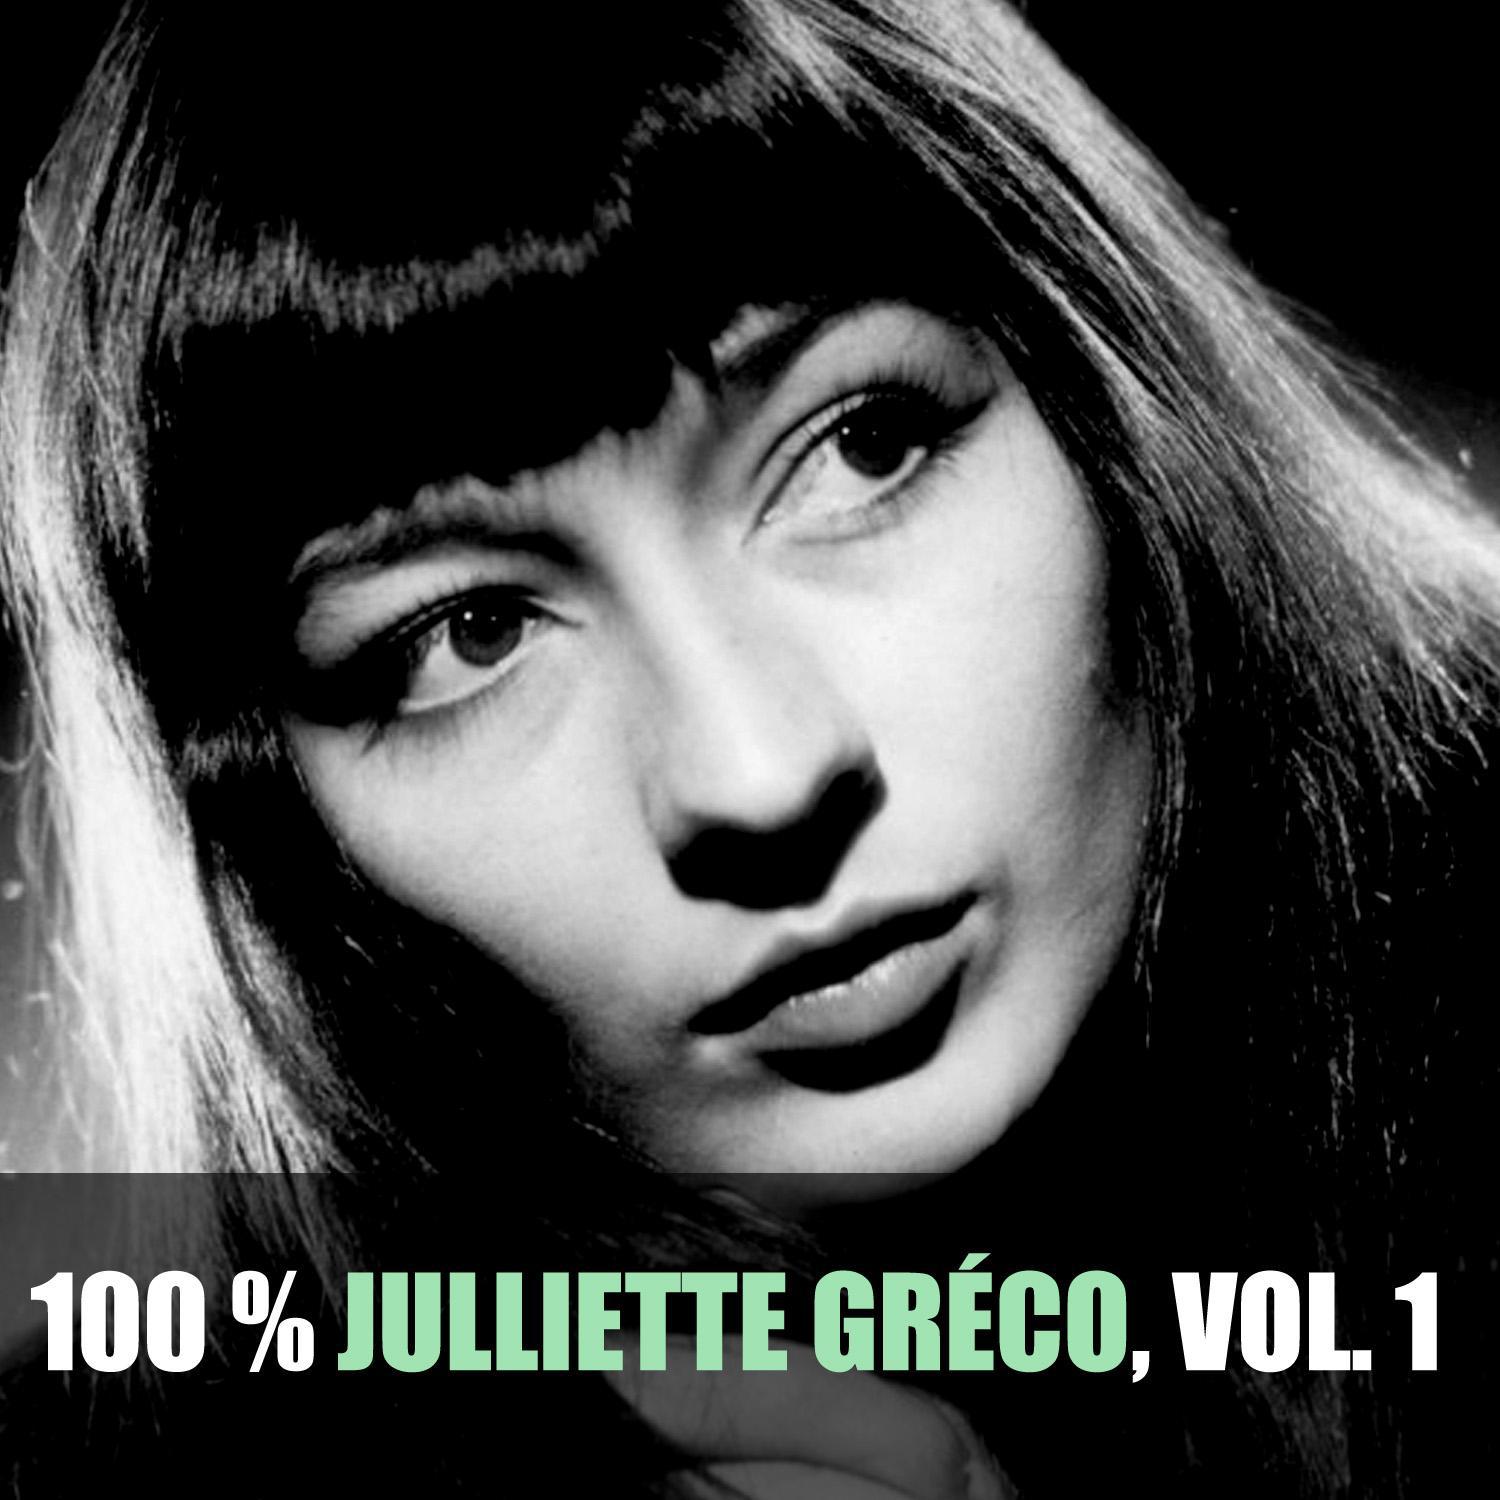 100 Juliette Gre co, Vol. 1